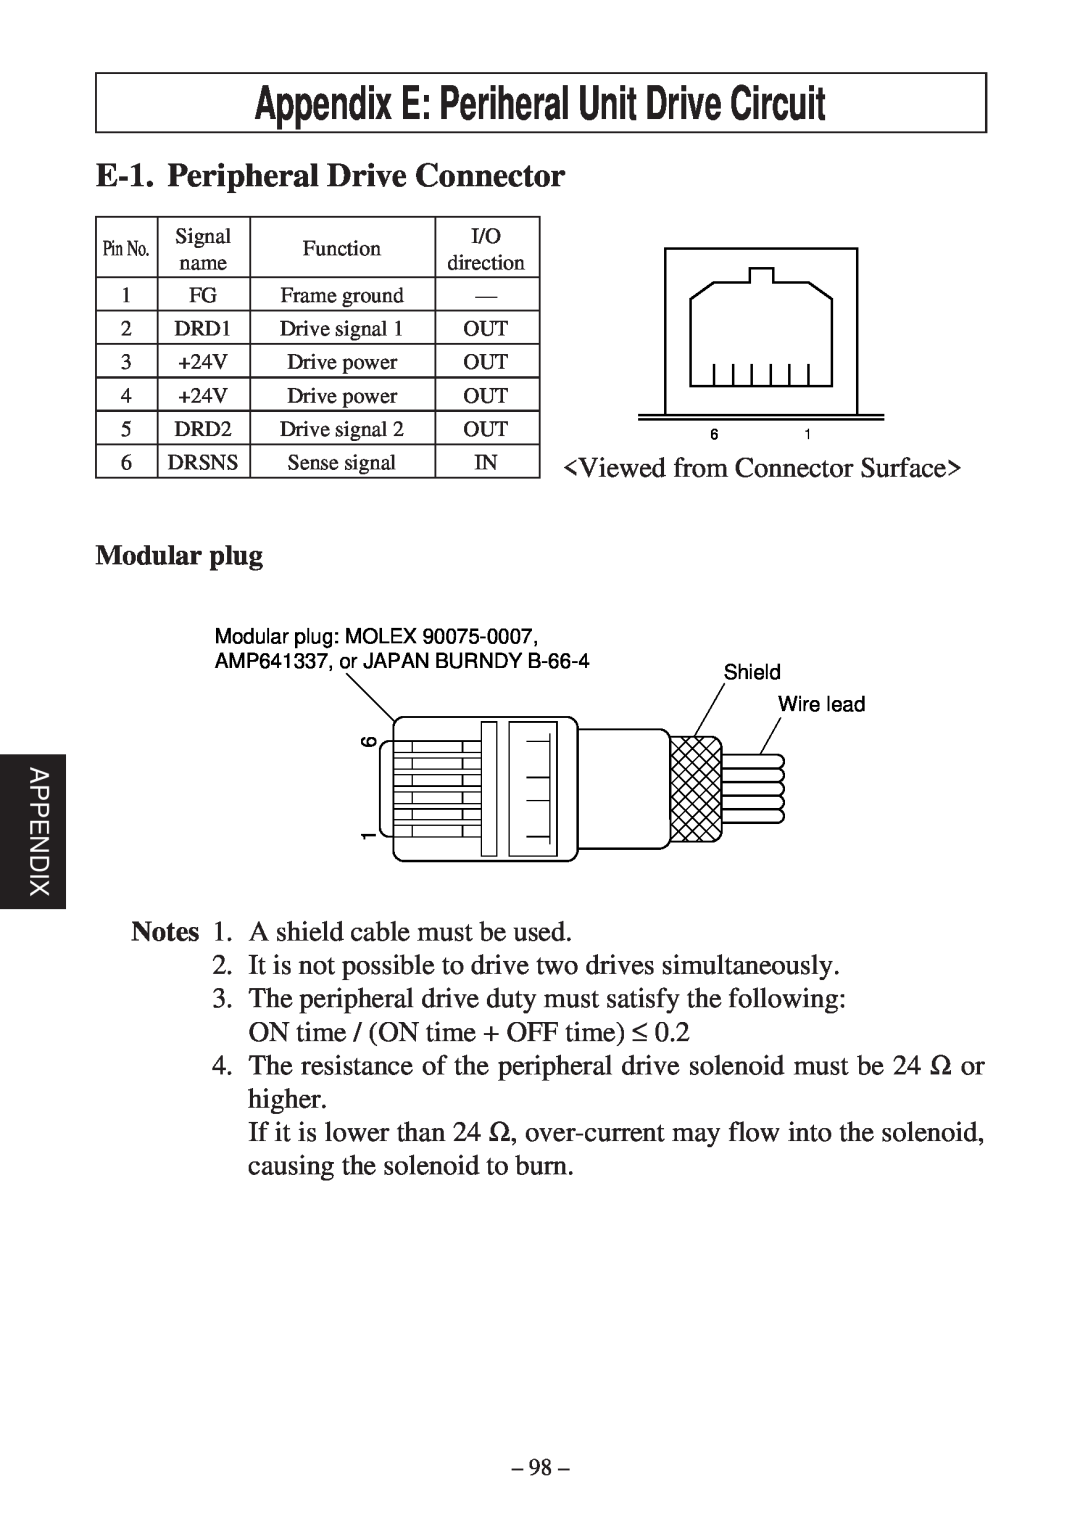 Star Micronics TSP2000 user manual Appendix E Periheral Unit Drive Circuit, E-1. Peripheral Drive Connector, Modular plug 